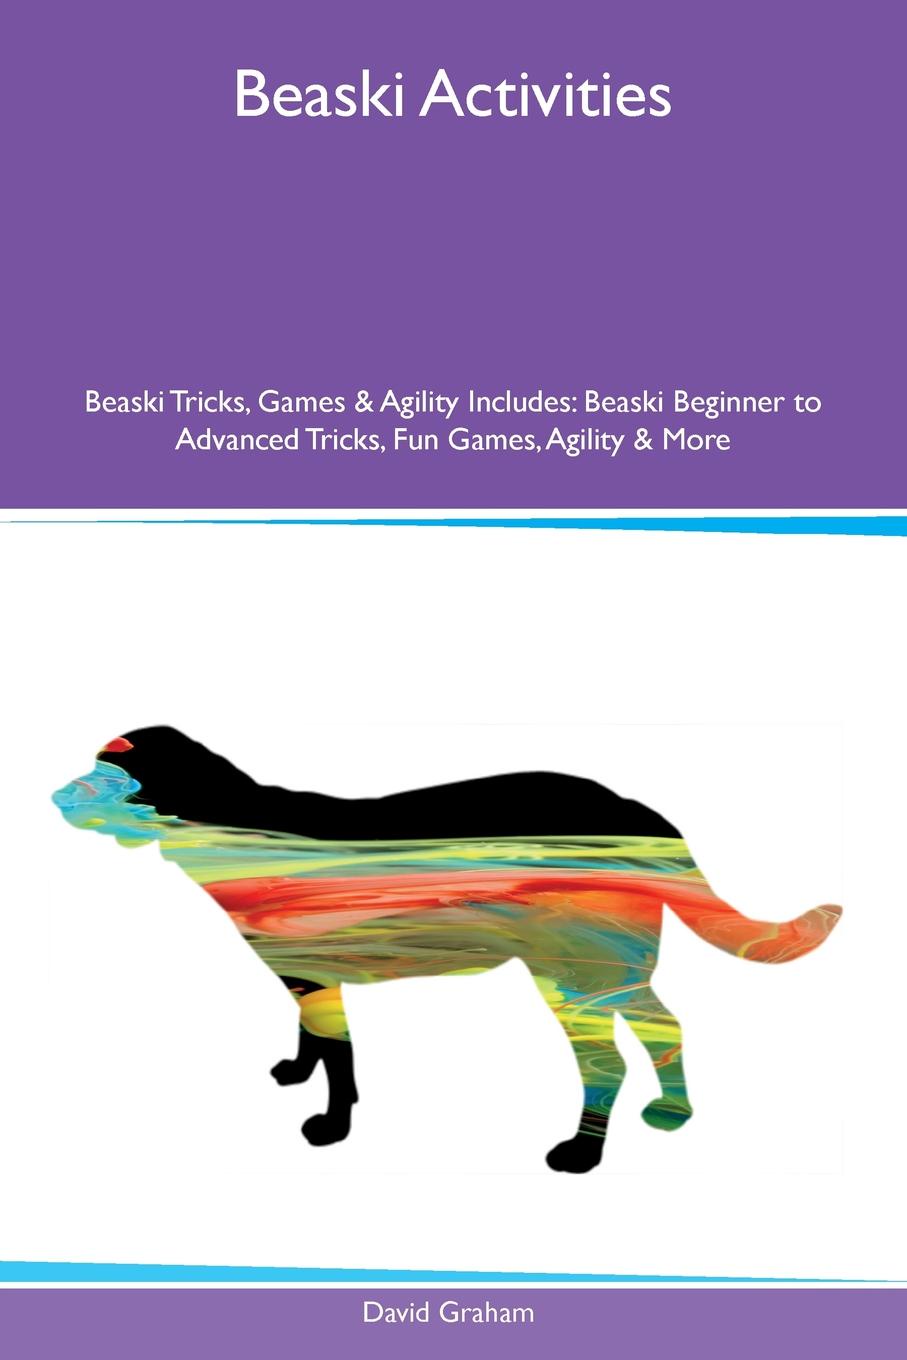 Beaski Activities Beaski Tricks, Games & Agility Includes. Beaski Beginner to Advanced Tricks, Fun Games, Agility & More